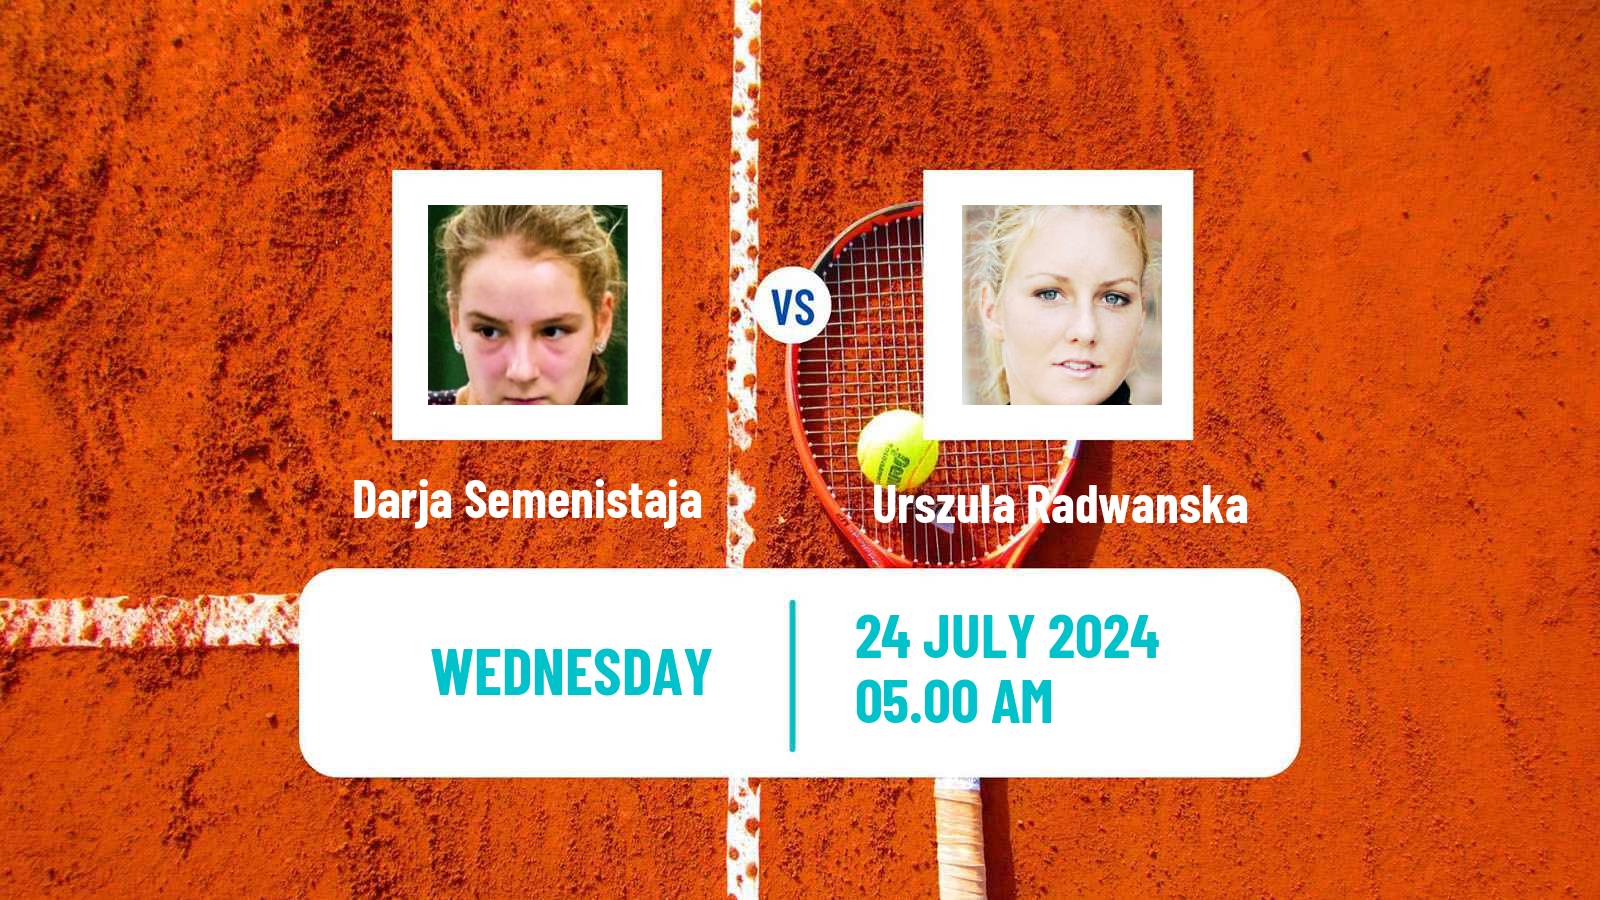 Tennis Warsaw Challenger Women Darja Semenistaja - Urszula Radwanska